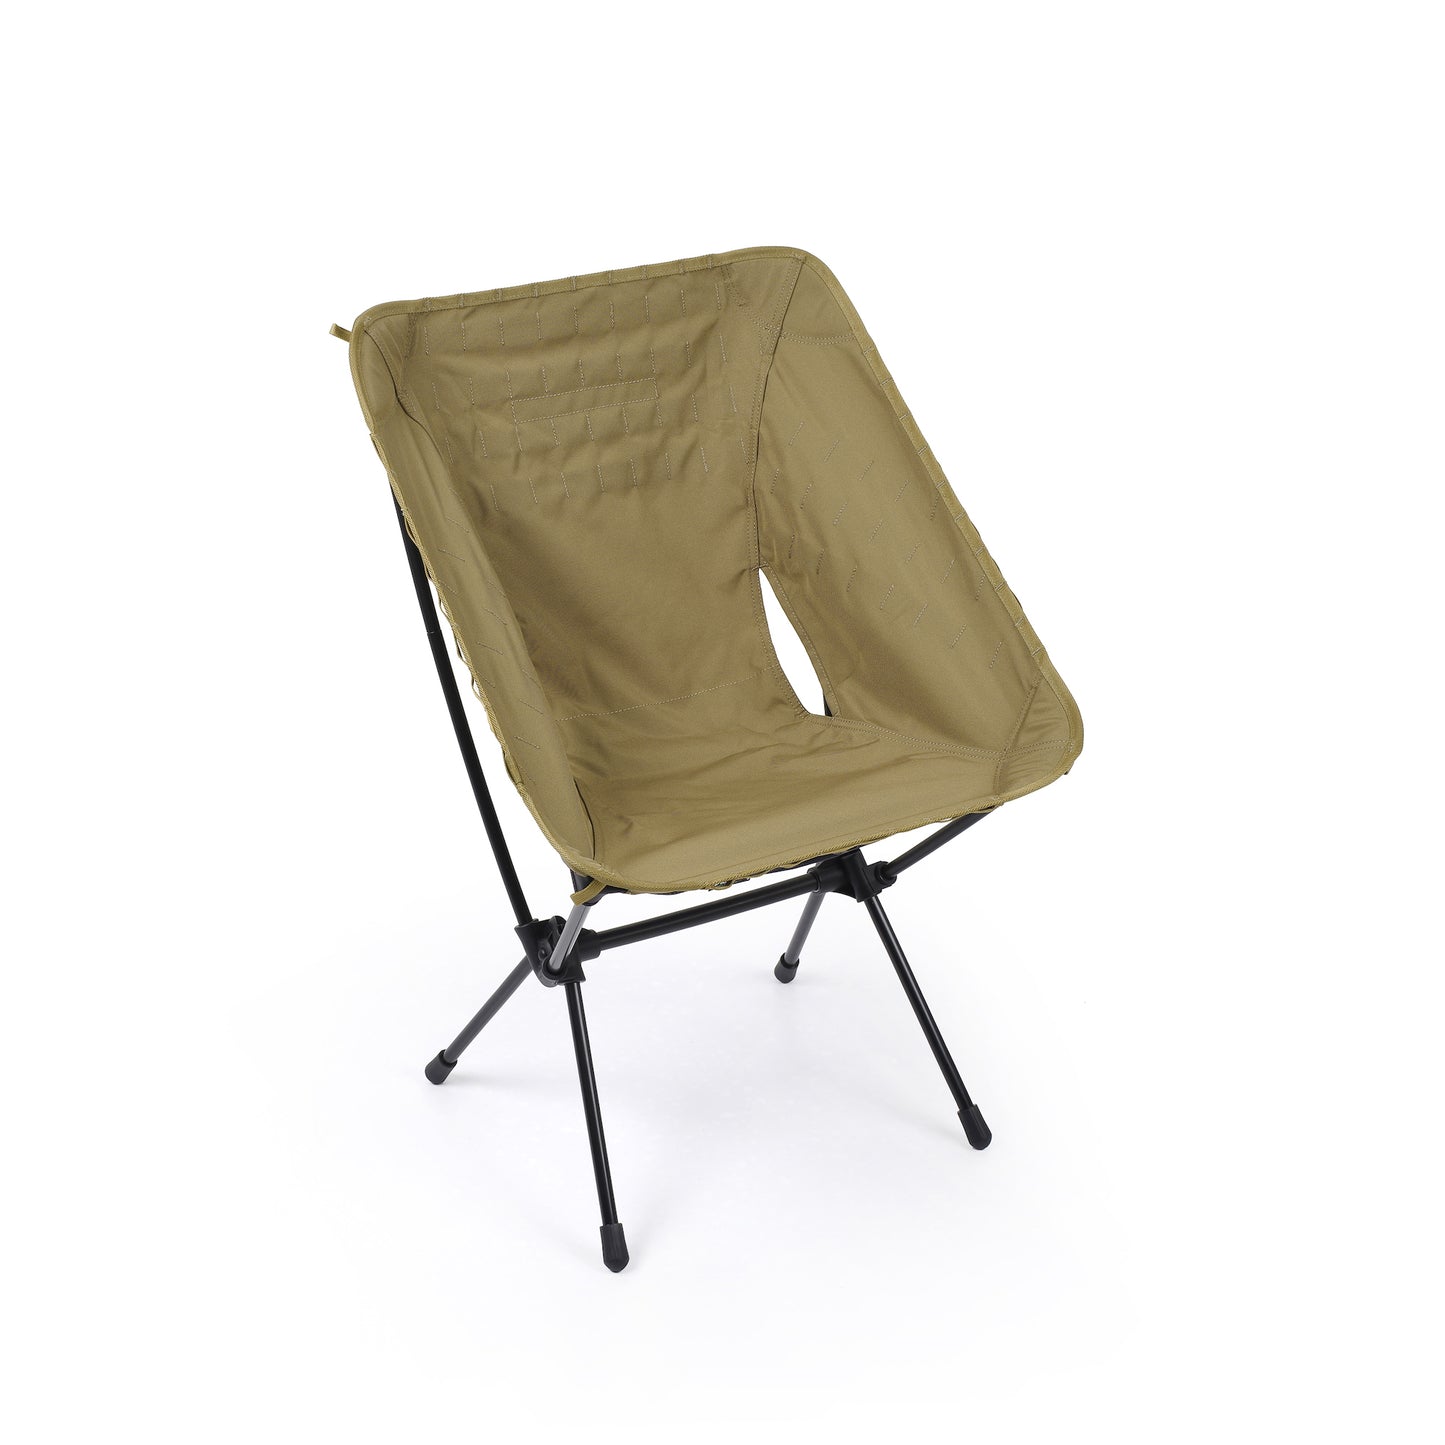 Tac. Chair Advanced Skin - Coyote Tan